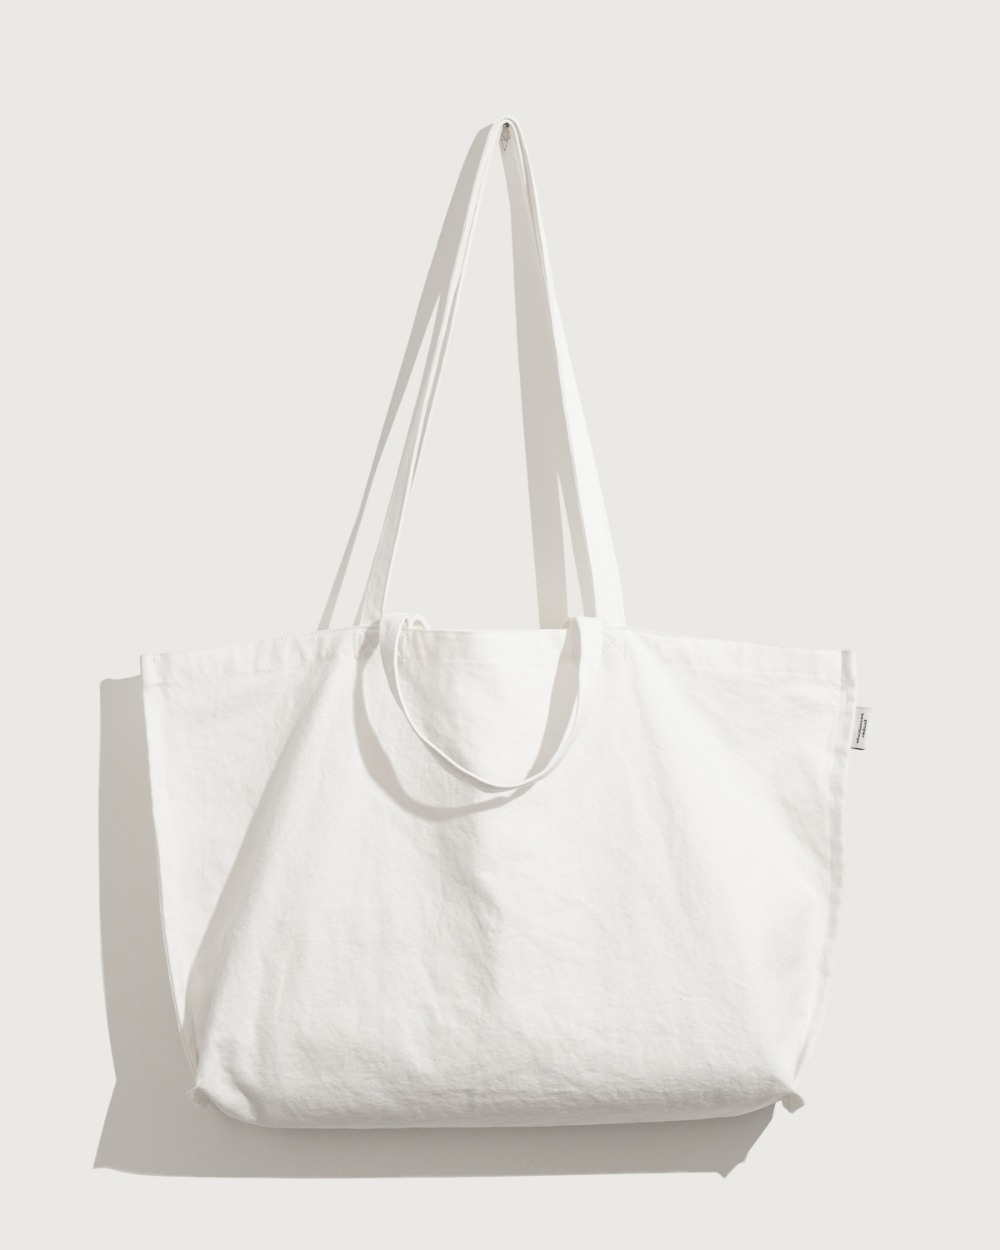 Four Seasons Bag / Large / Warm white (사계절 천가방)